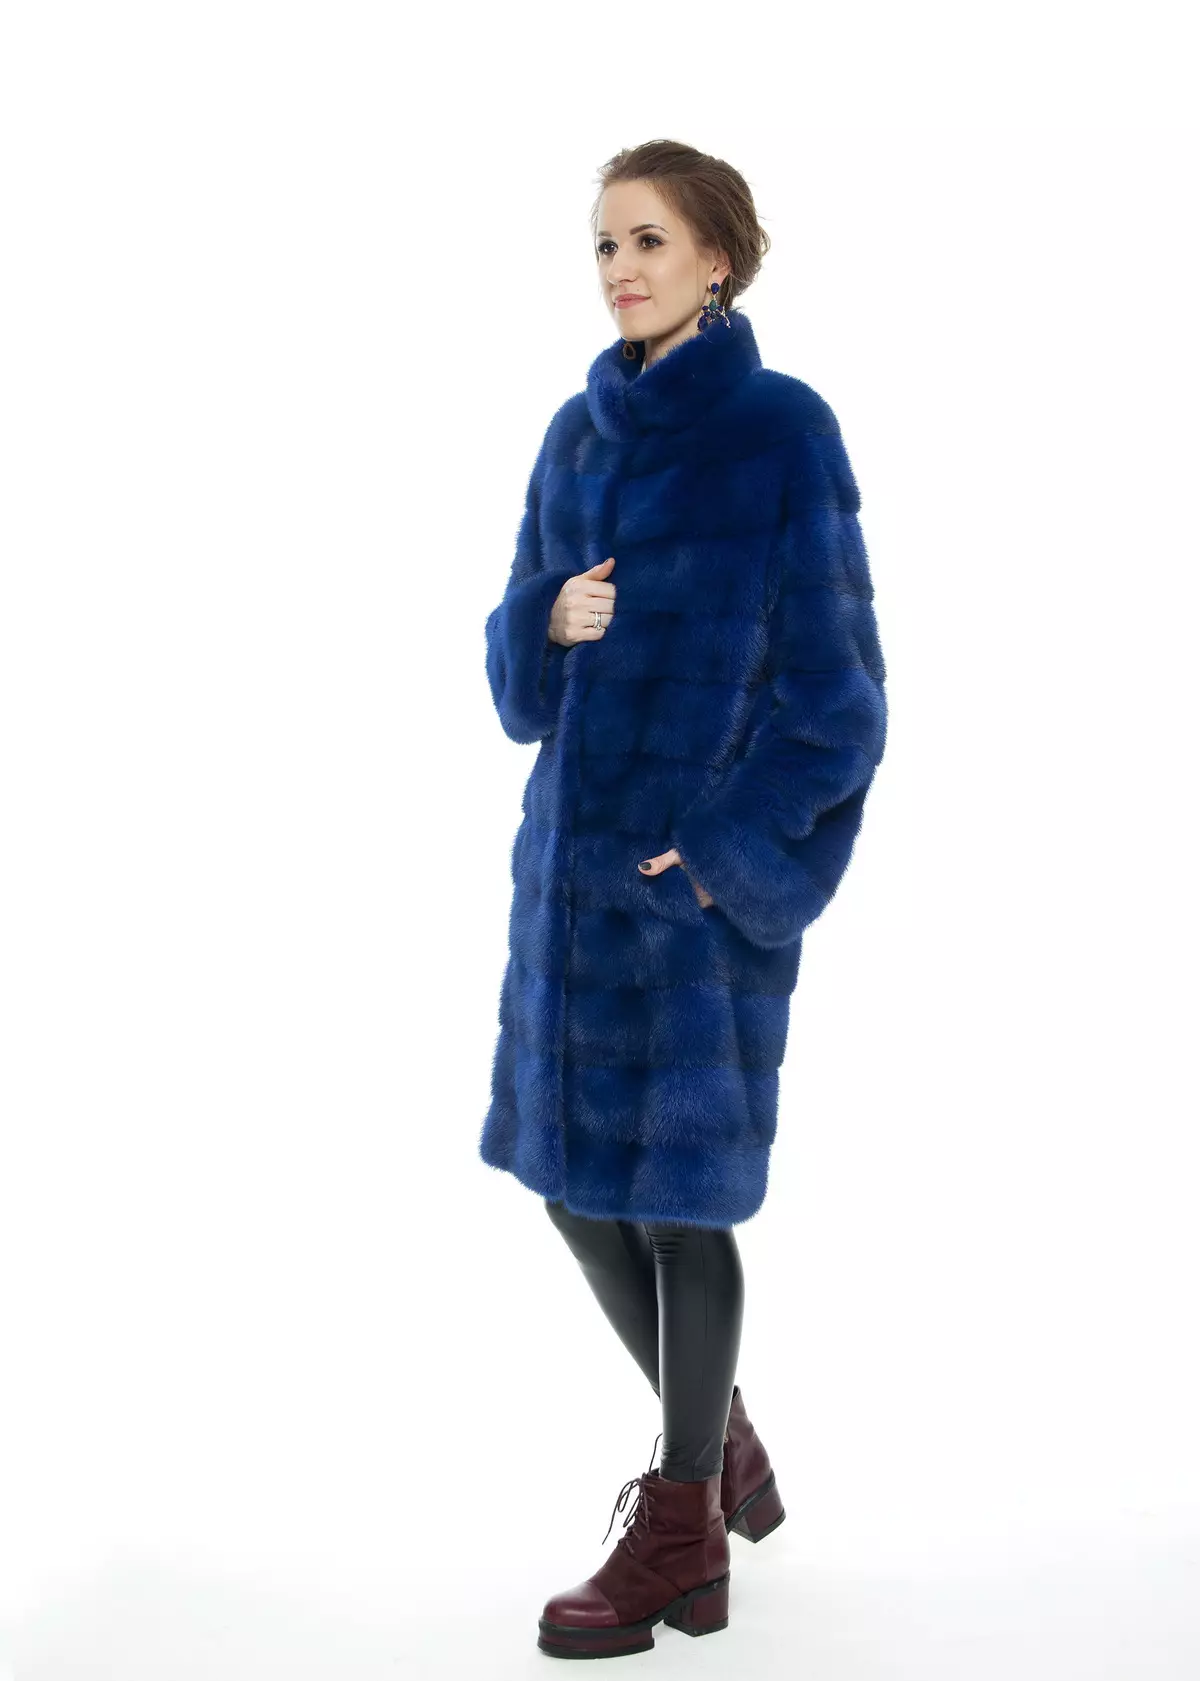 Melkovo Fur Coats (39 รูป): รีวิวรุ่นและความคิดเห็นคุณภาพ 322_19